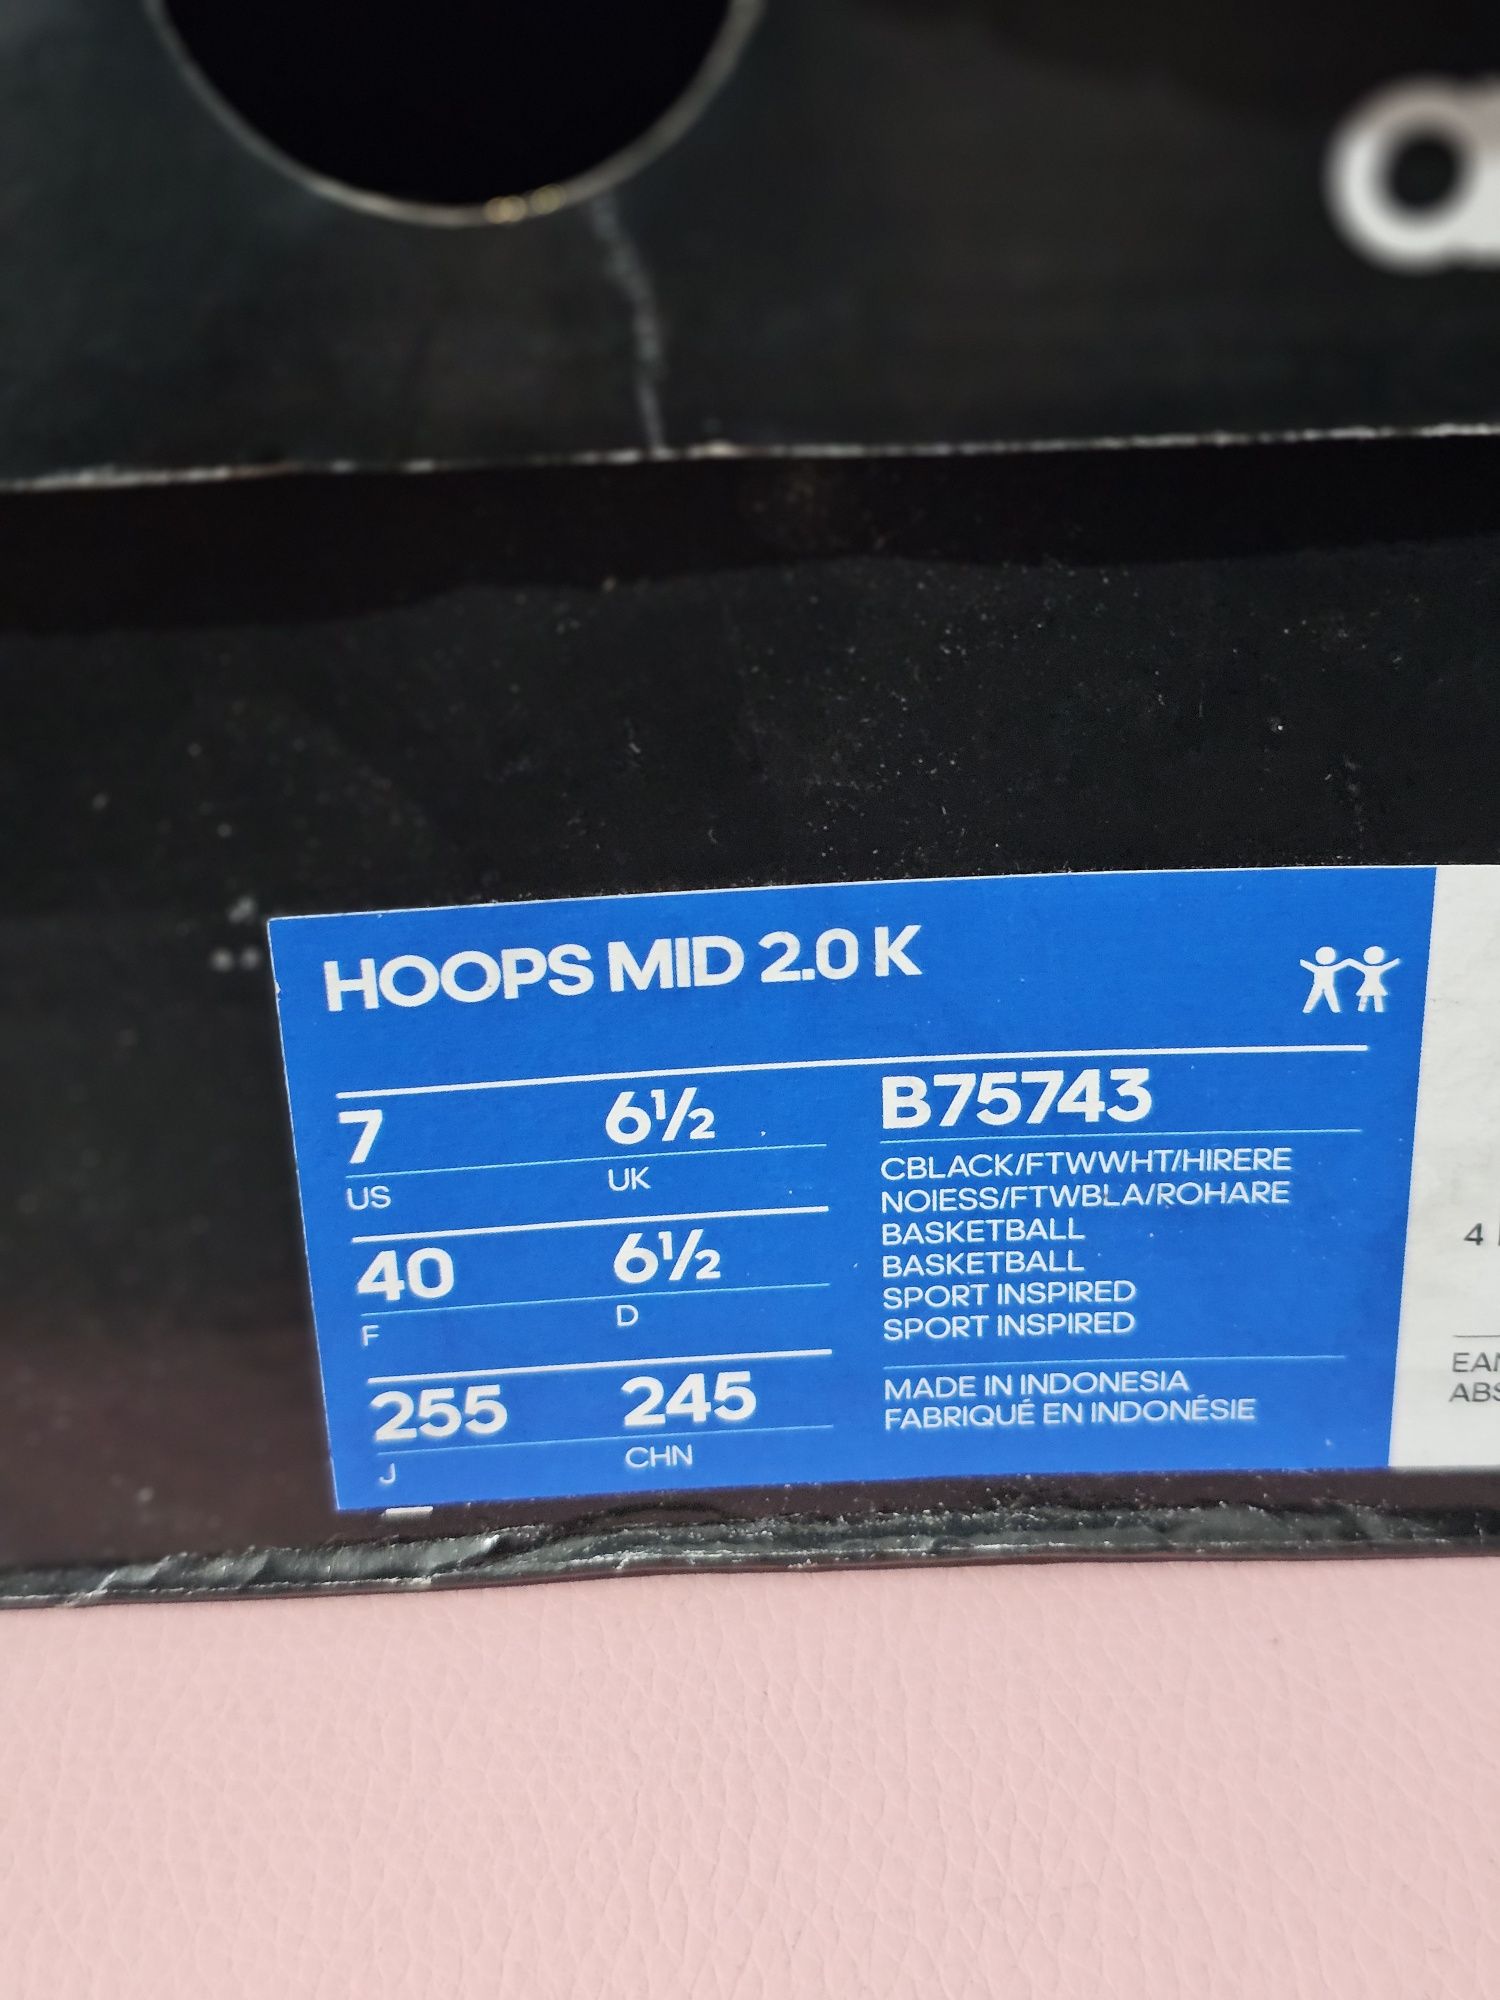 Buty nowe Adidas hoops mid 2.0 K rozmiar Eu 40 model b75743